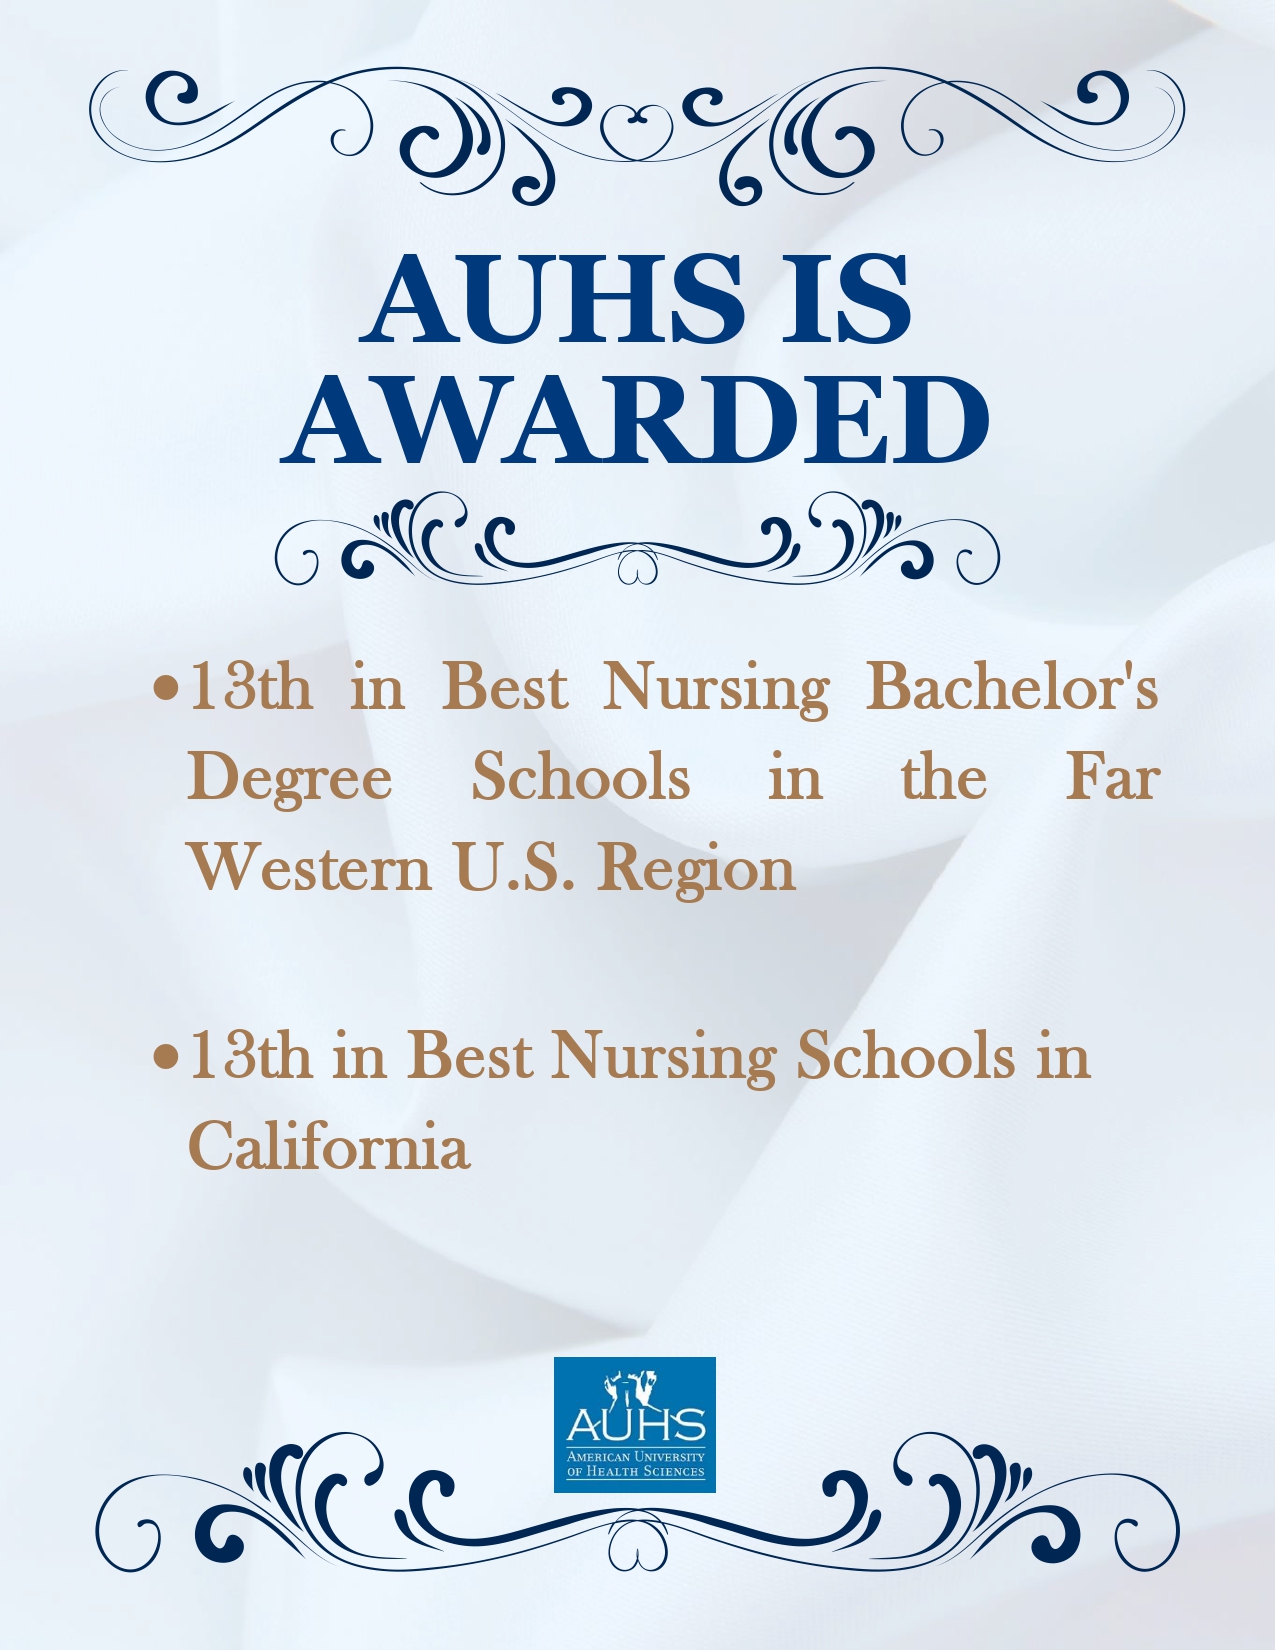 AUHS School of Nursing Earns Spot in 2021 Ranking of Top Nursing Schools